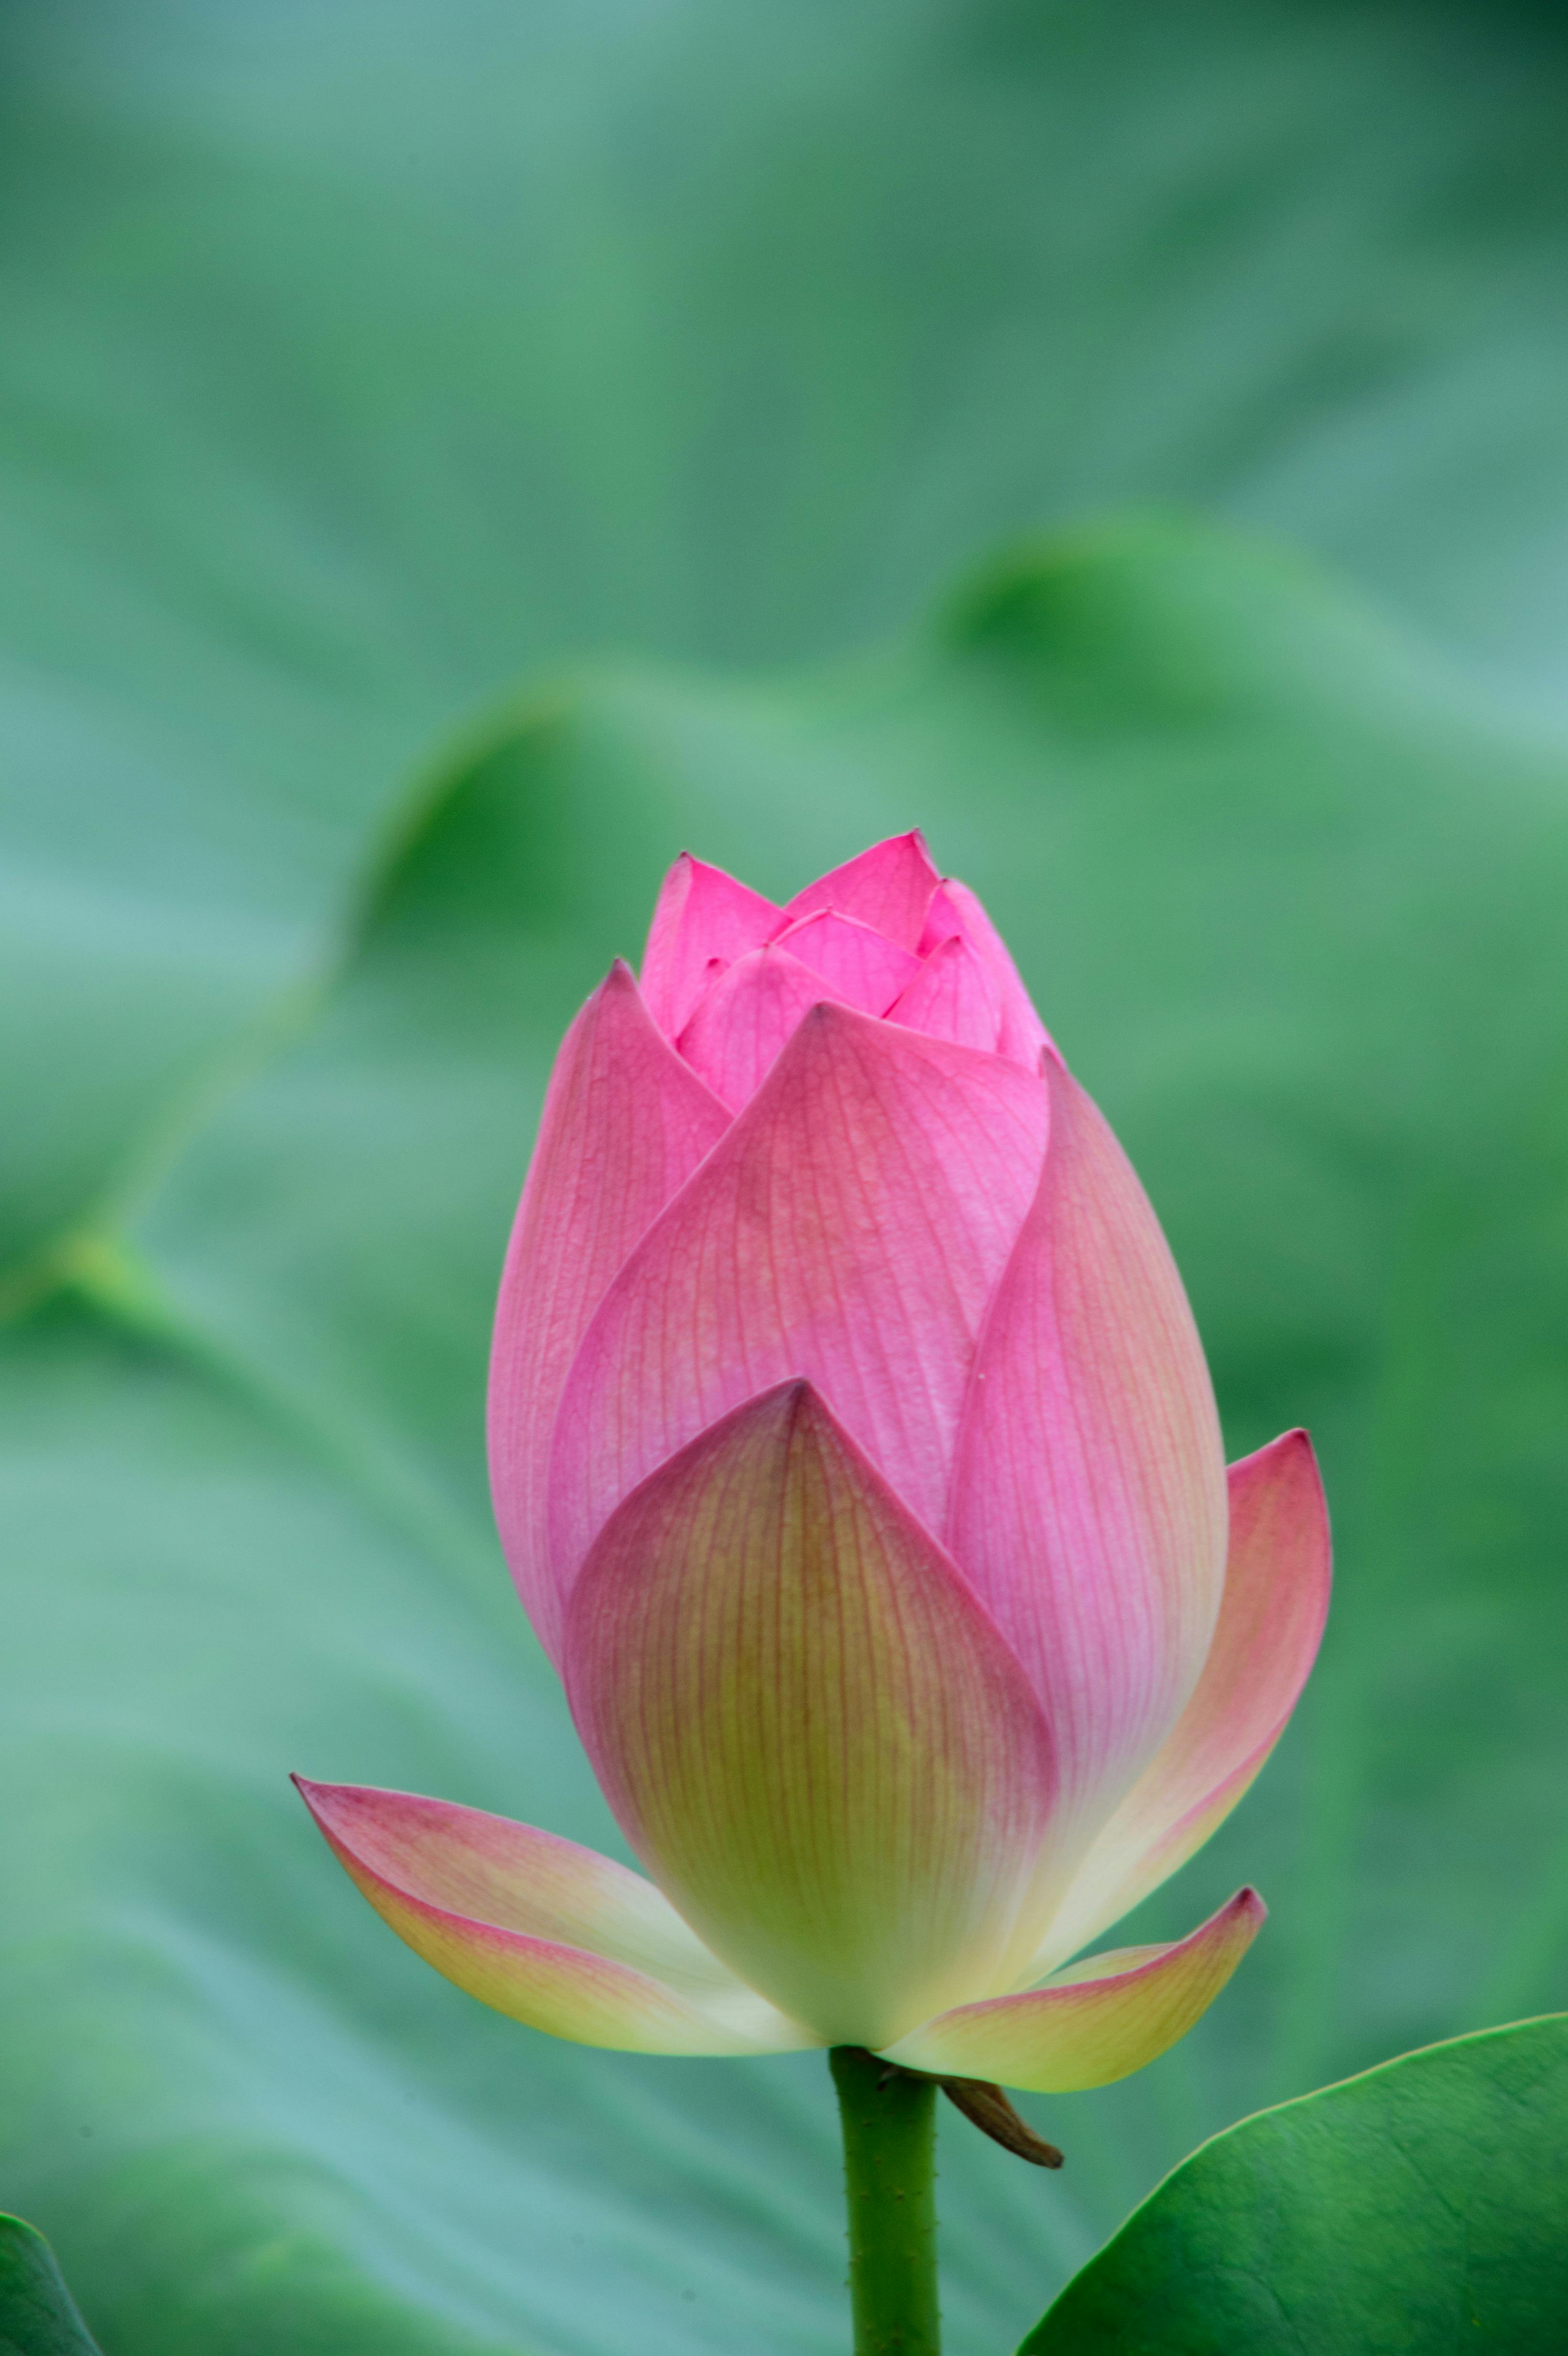 Pink Lotus Flowers Water Lilies HD Wallpaper for Desktop 2560x1440 :  Wallpapers13.com